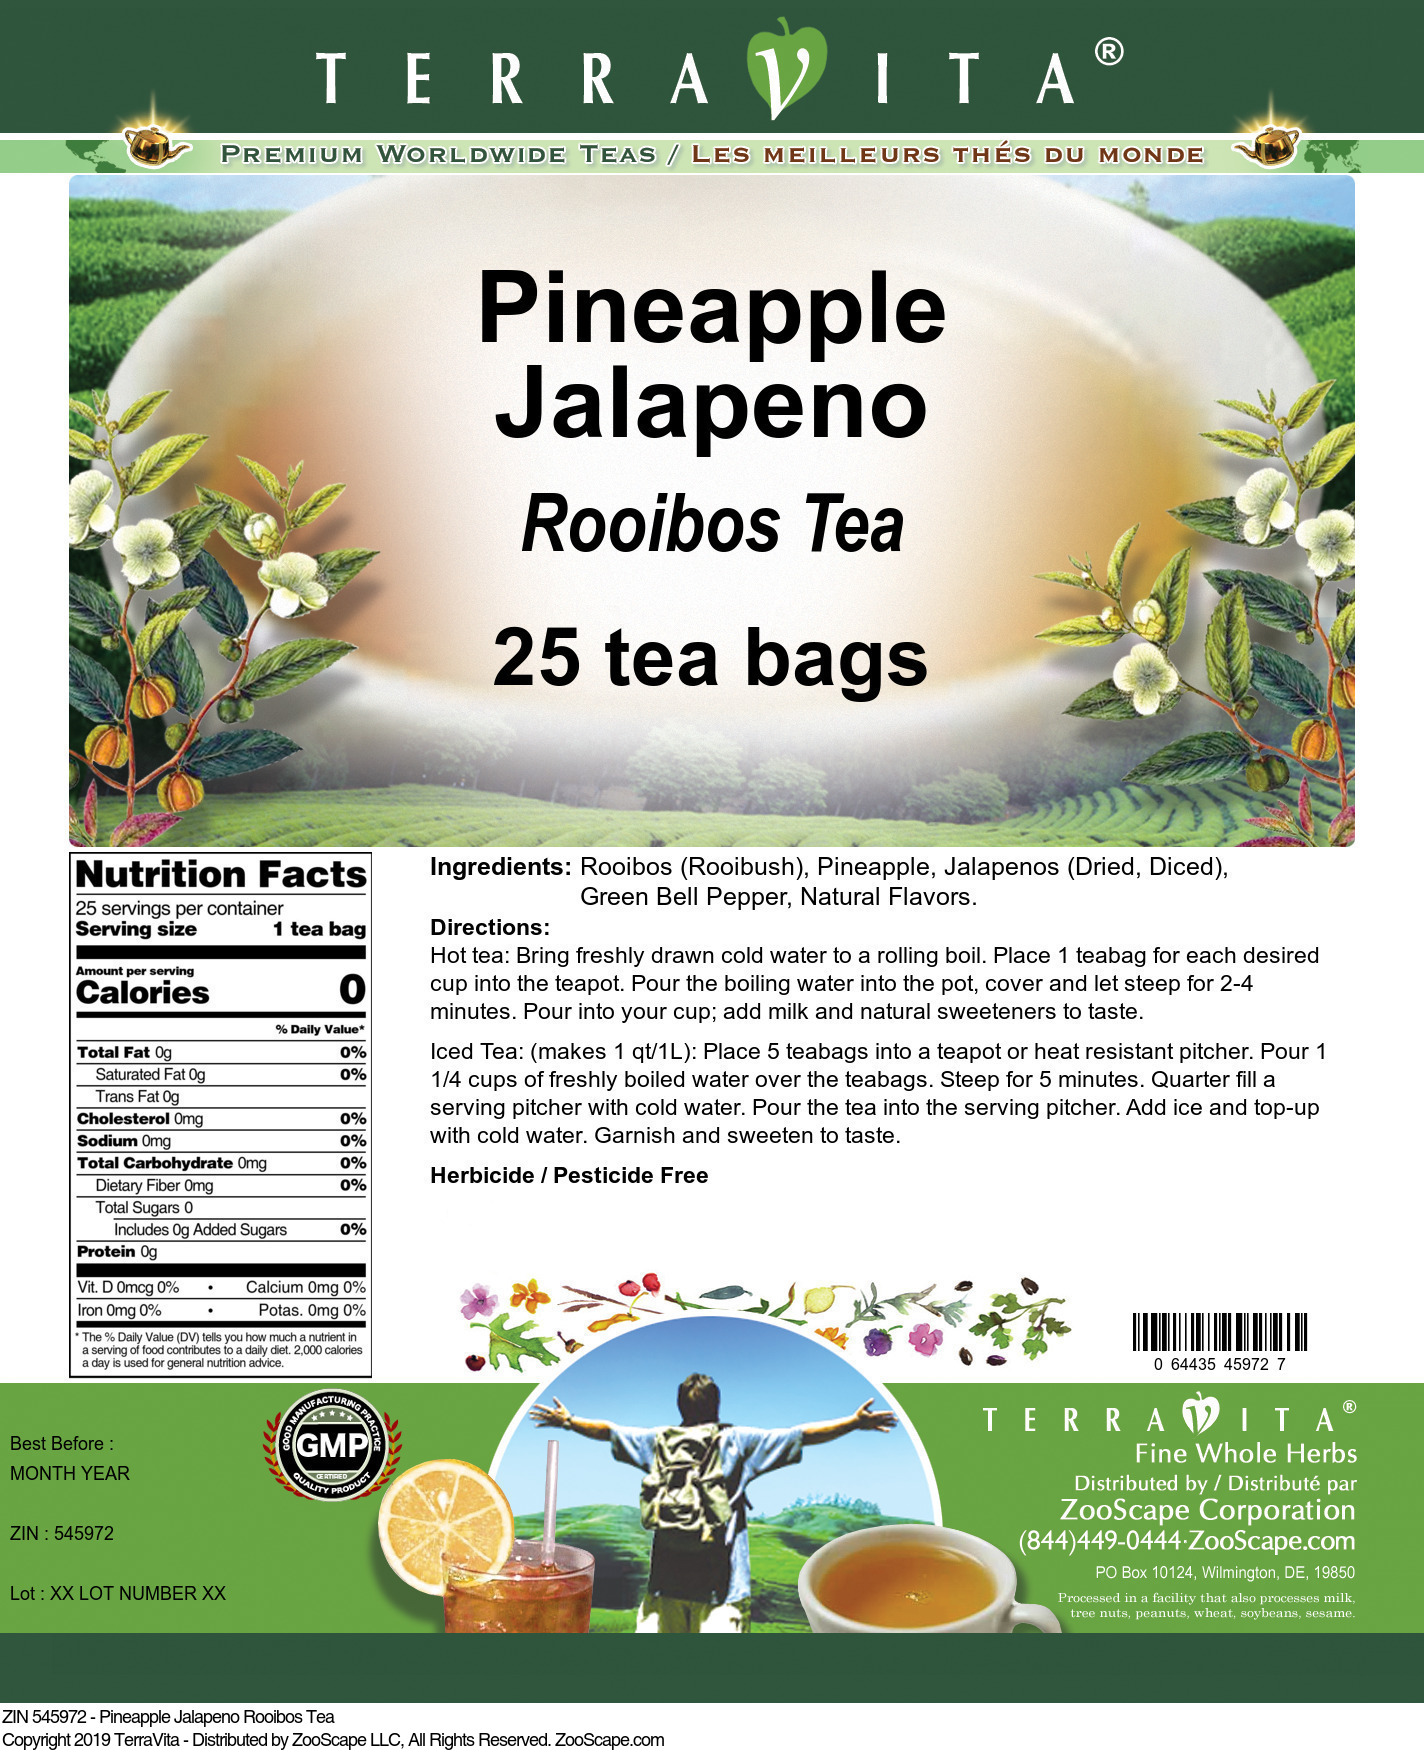 Pineapple Jalapeno Rooibos Tea - Label